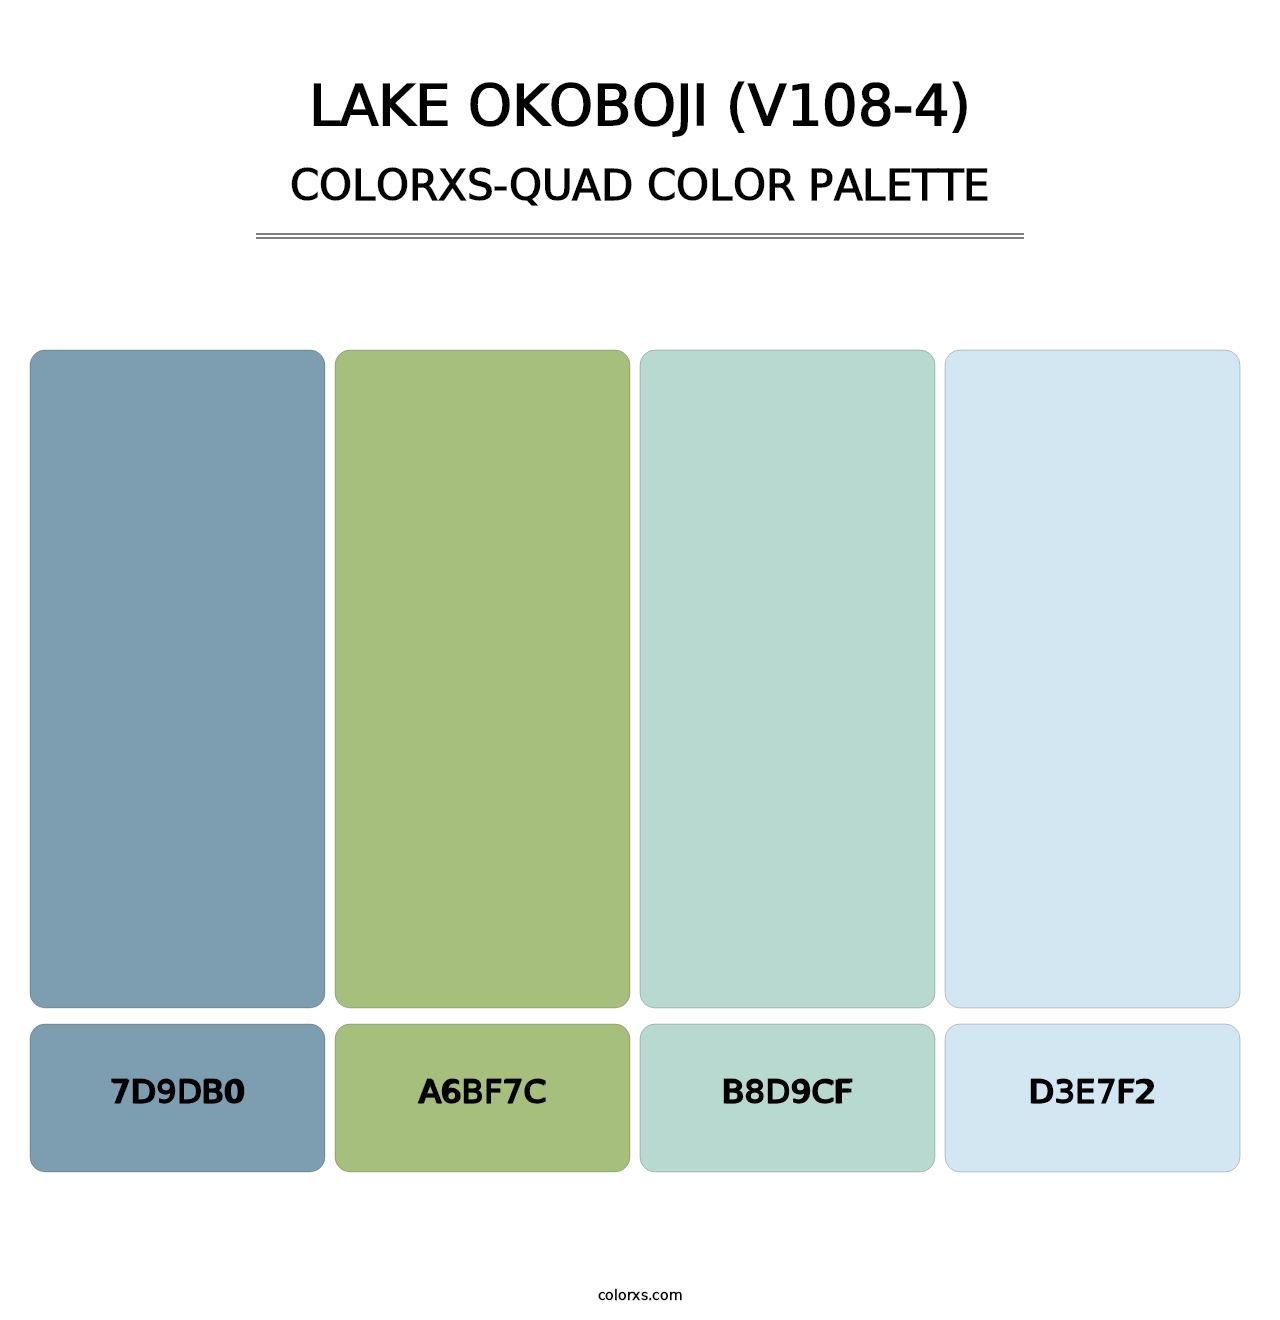 Lake Okoboji (V108-4) - Colorxs Quad Palette